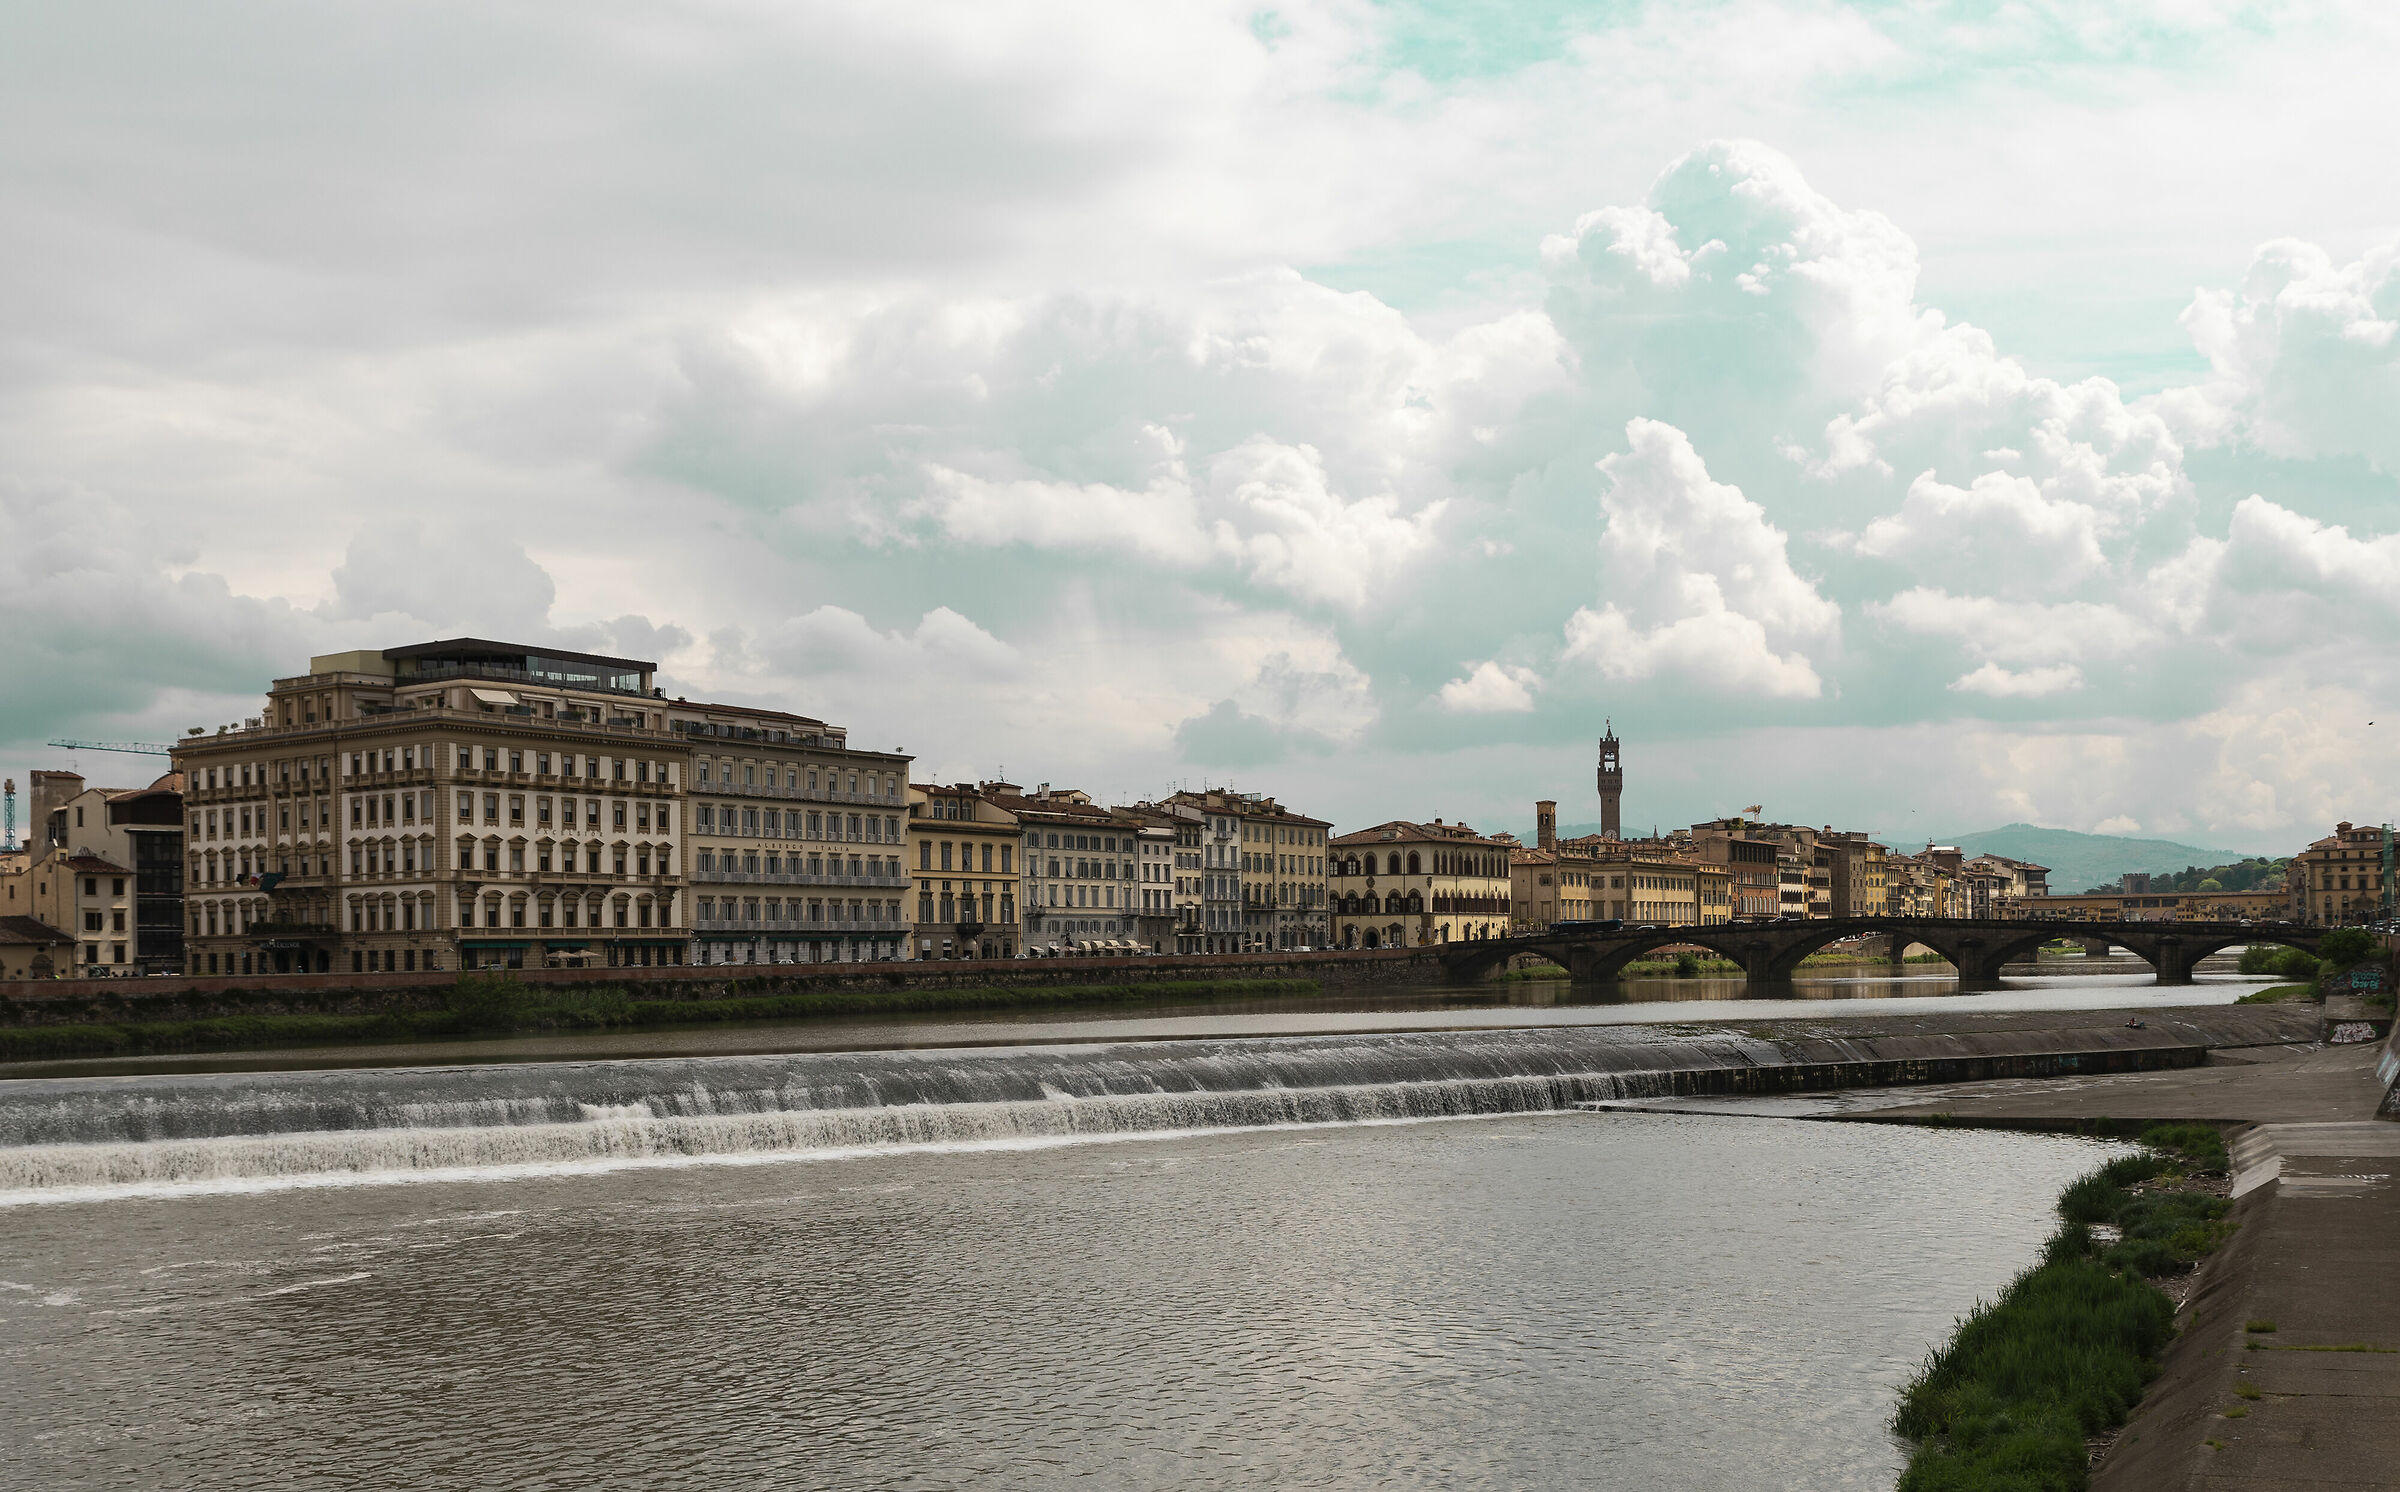 Bridges in Florence...